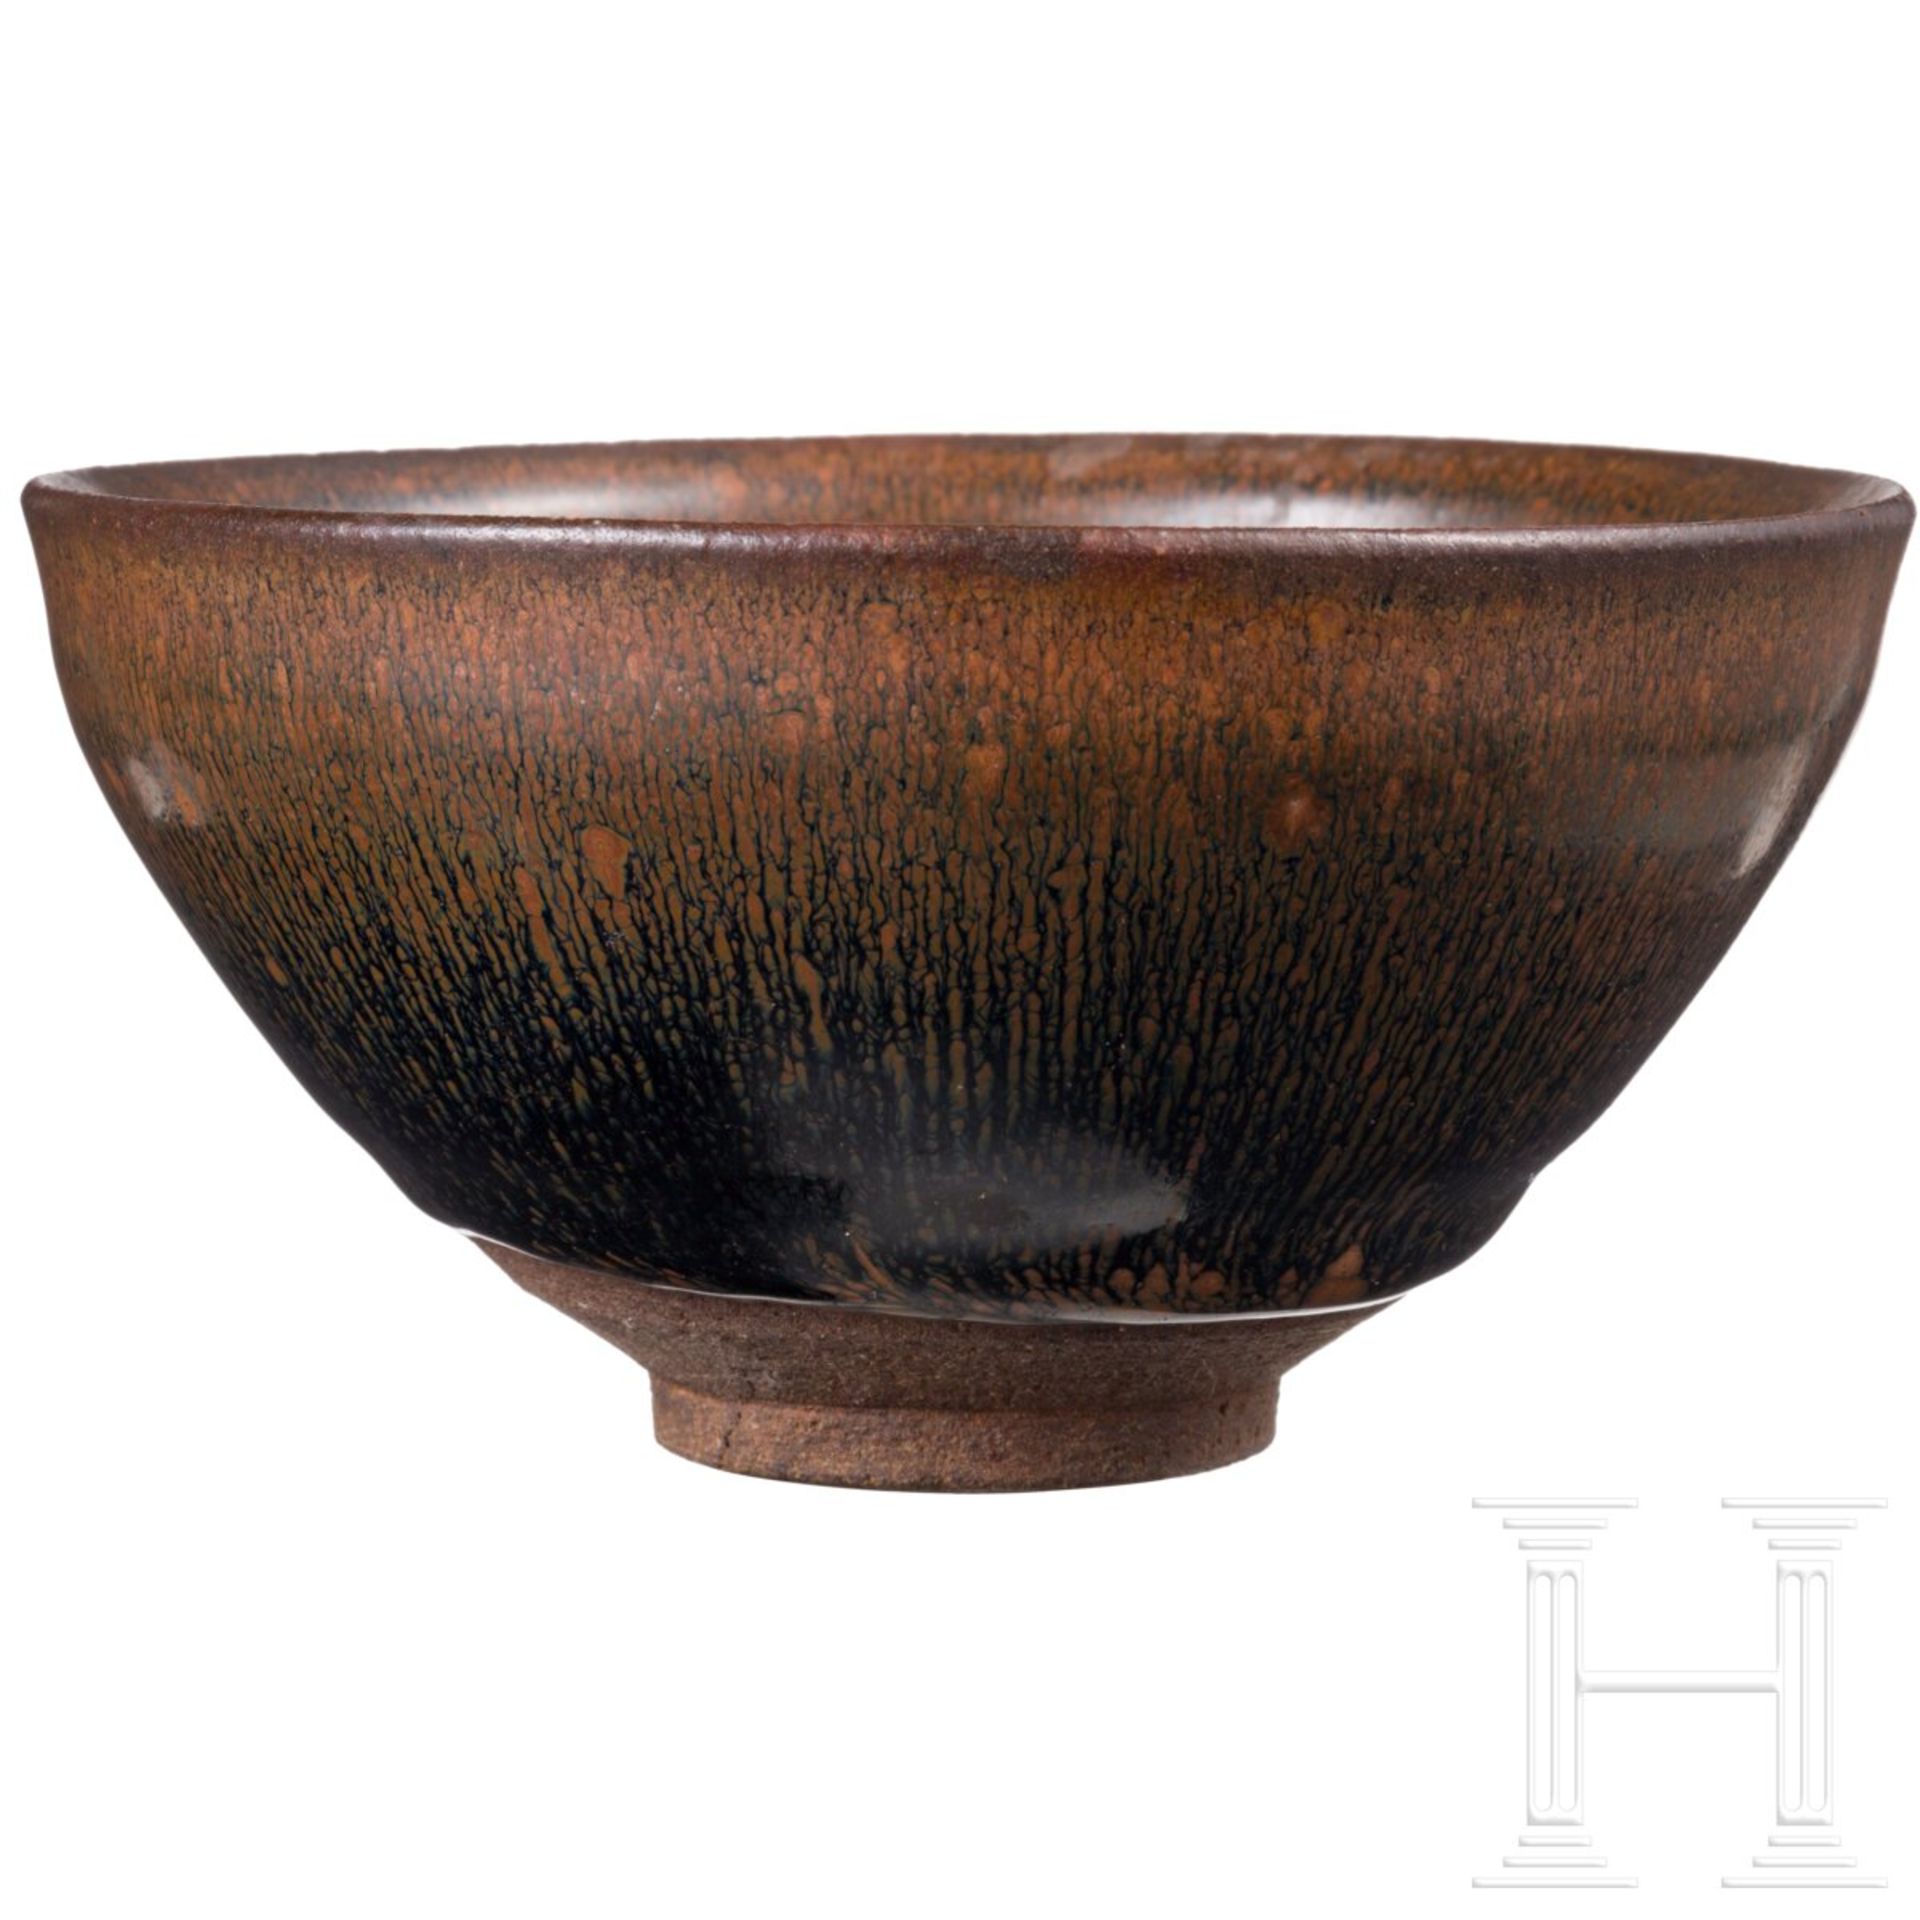 Jianyao-Teeschale mit Hasenfellglasur, China, wohl Song-Dynastie (12./13. Jhdt.)